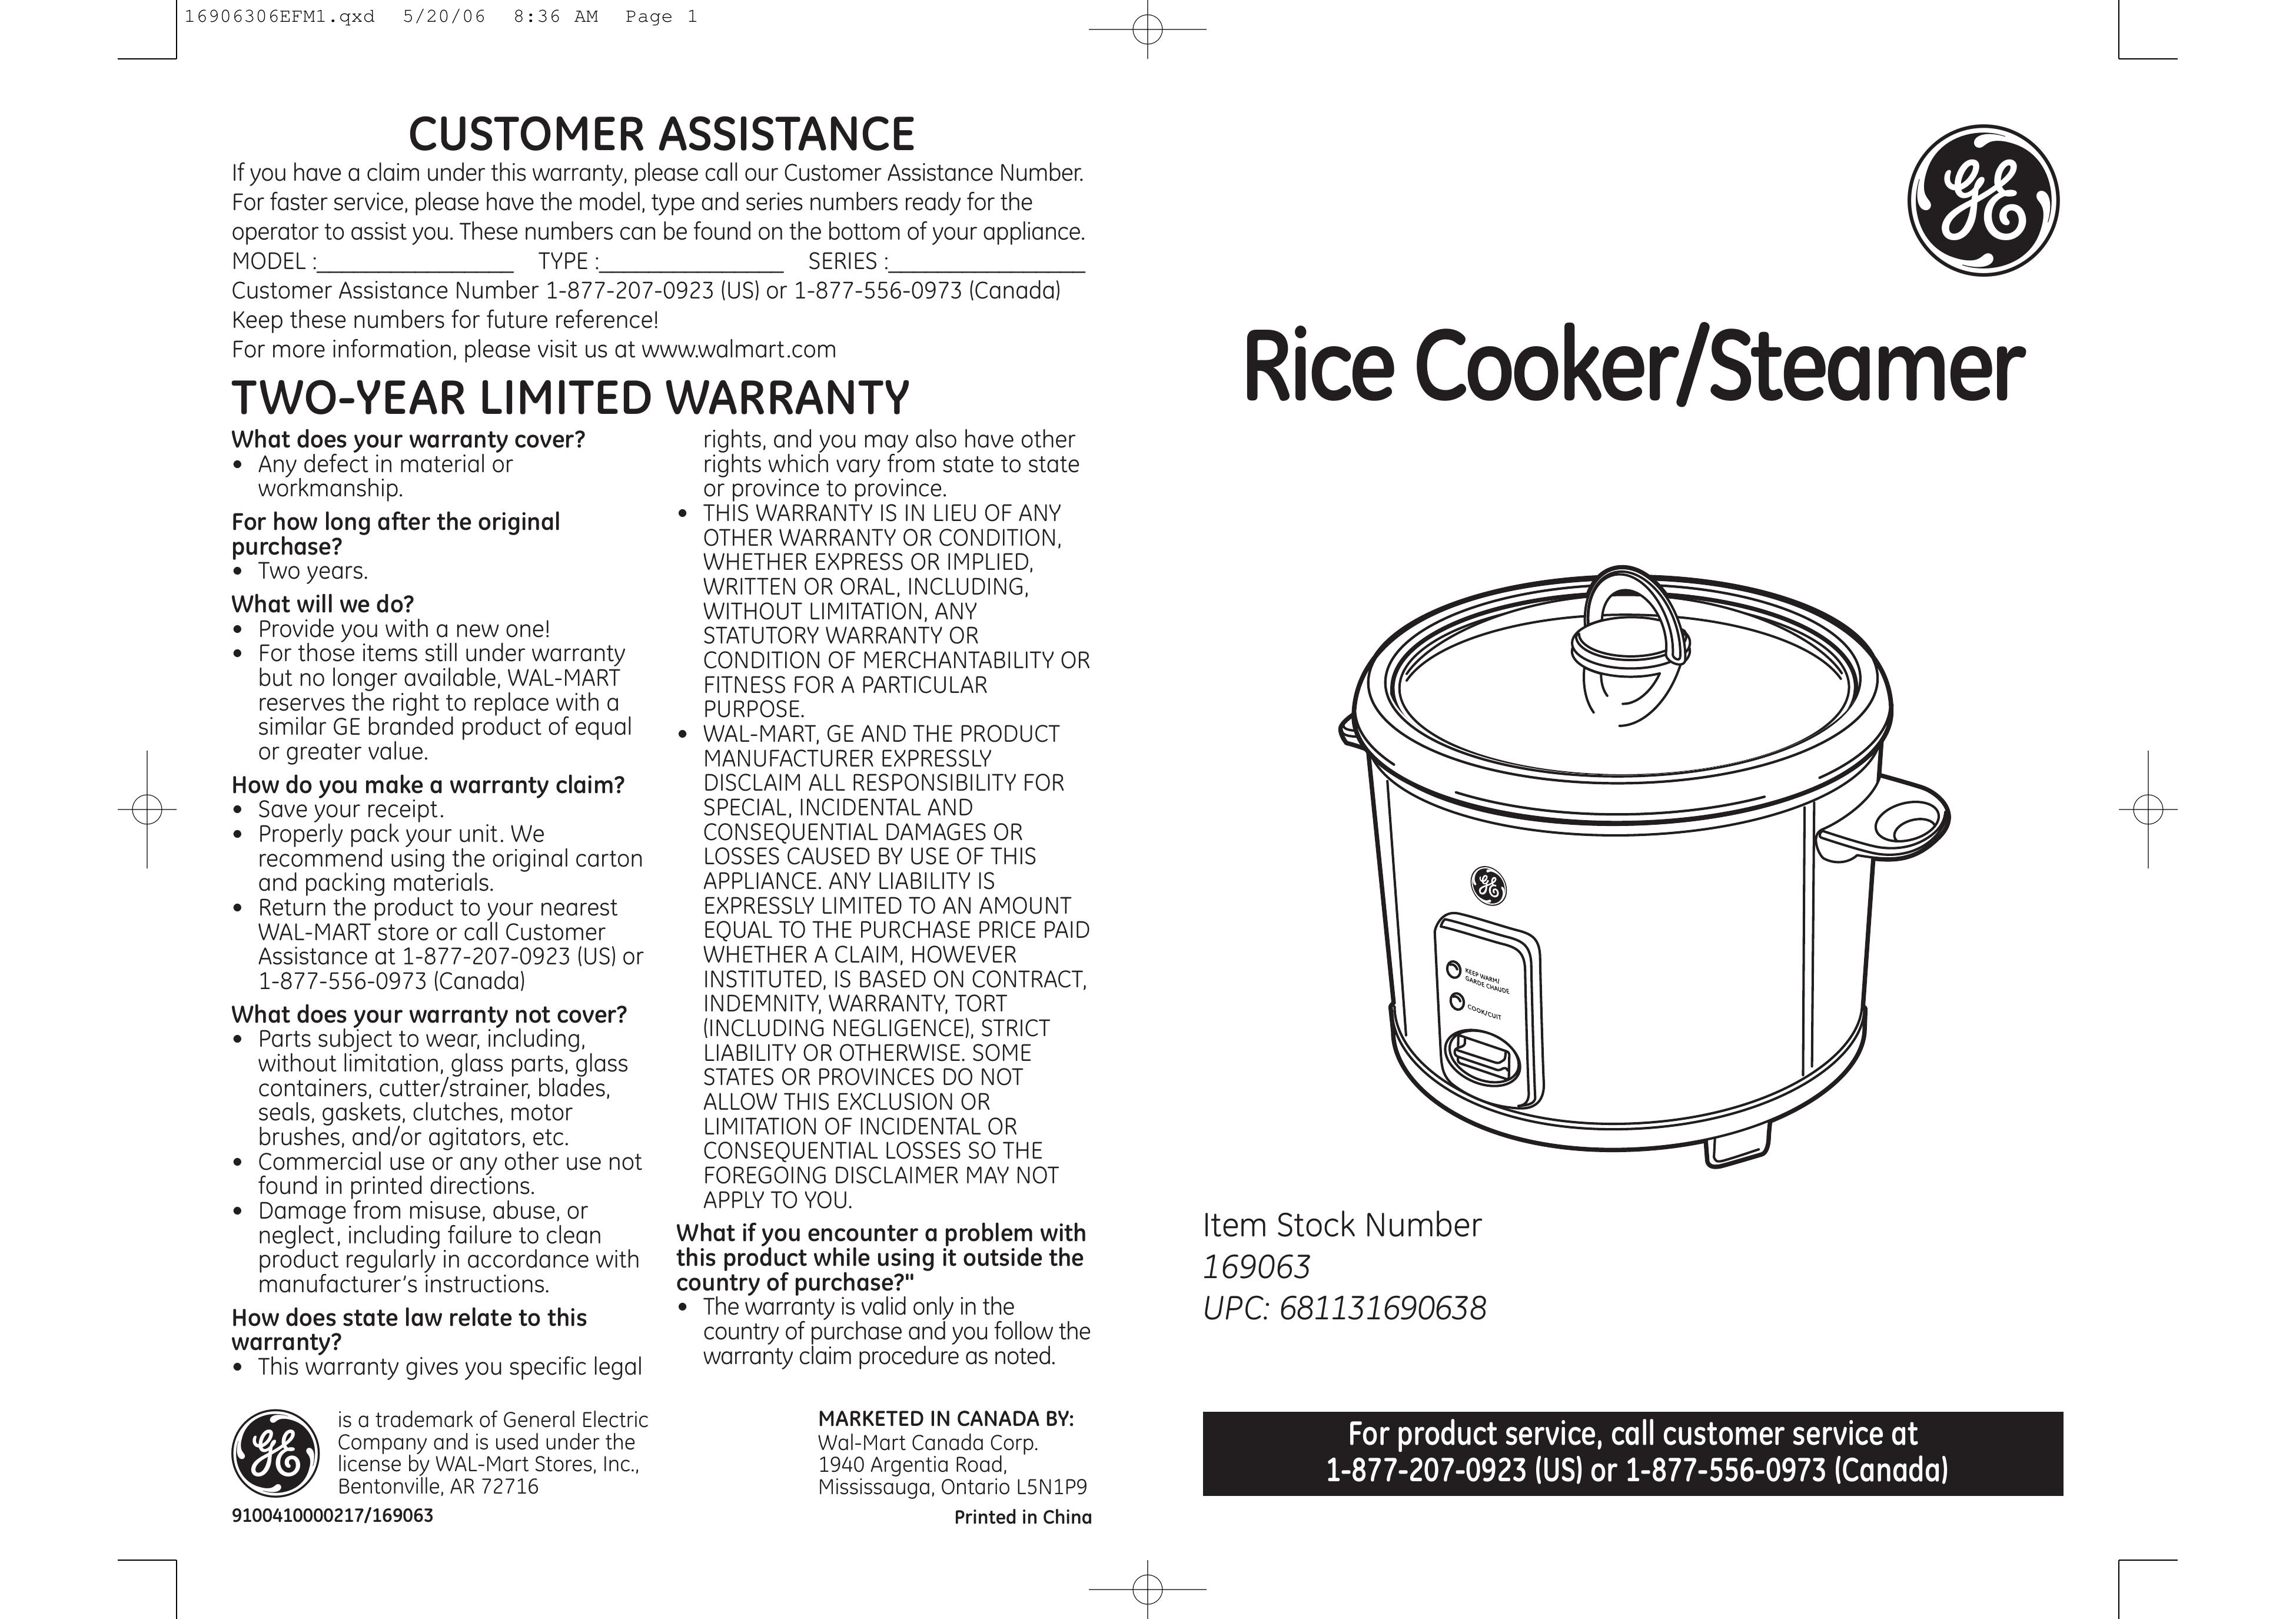 GE 9100410000217 Rice Cooker User Manual